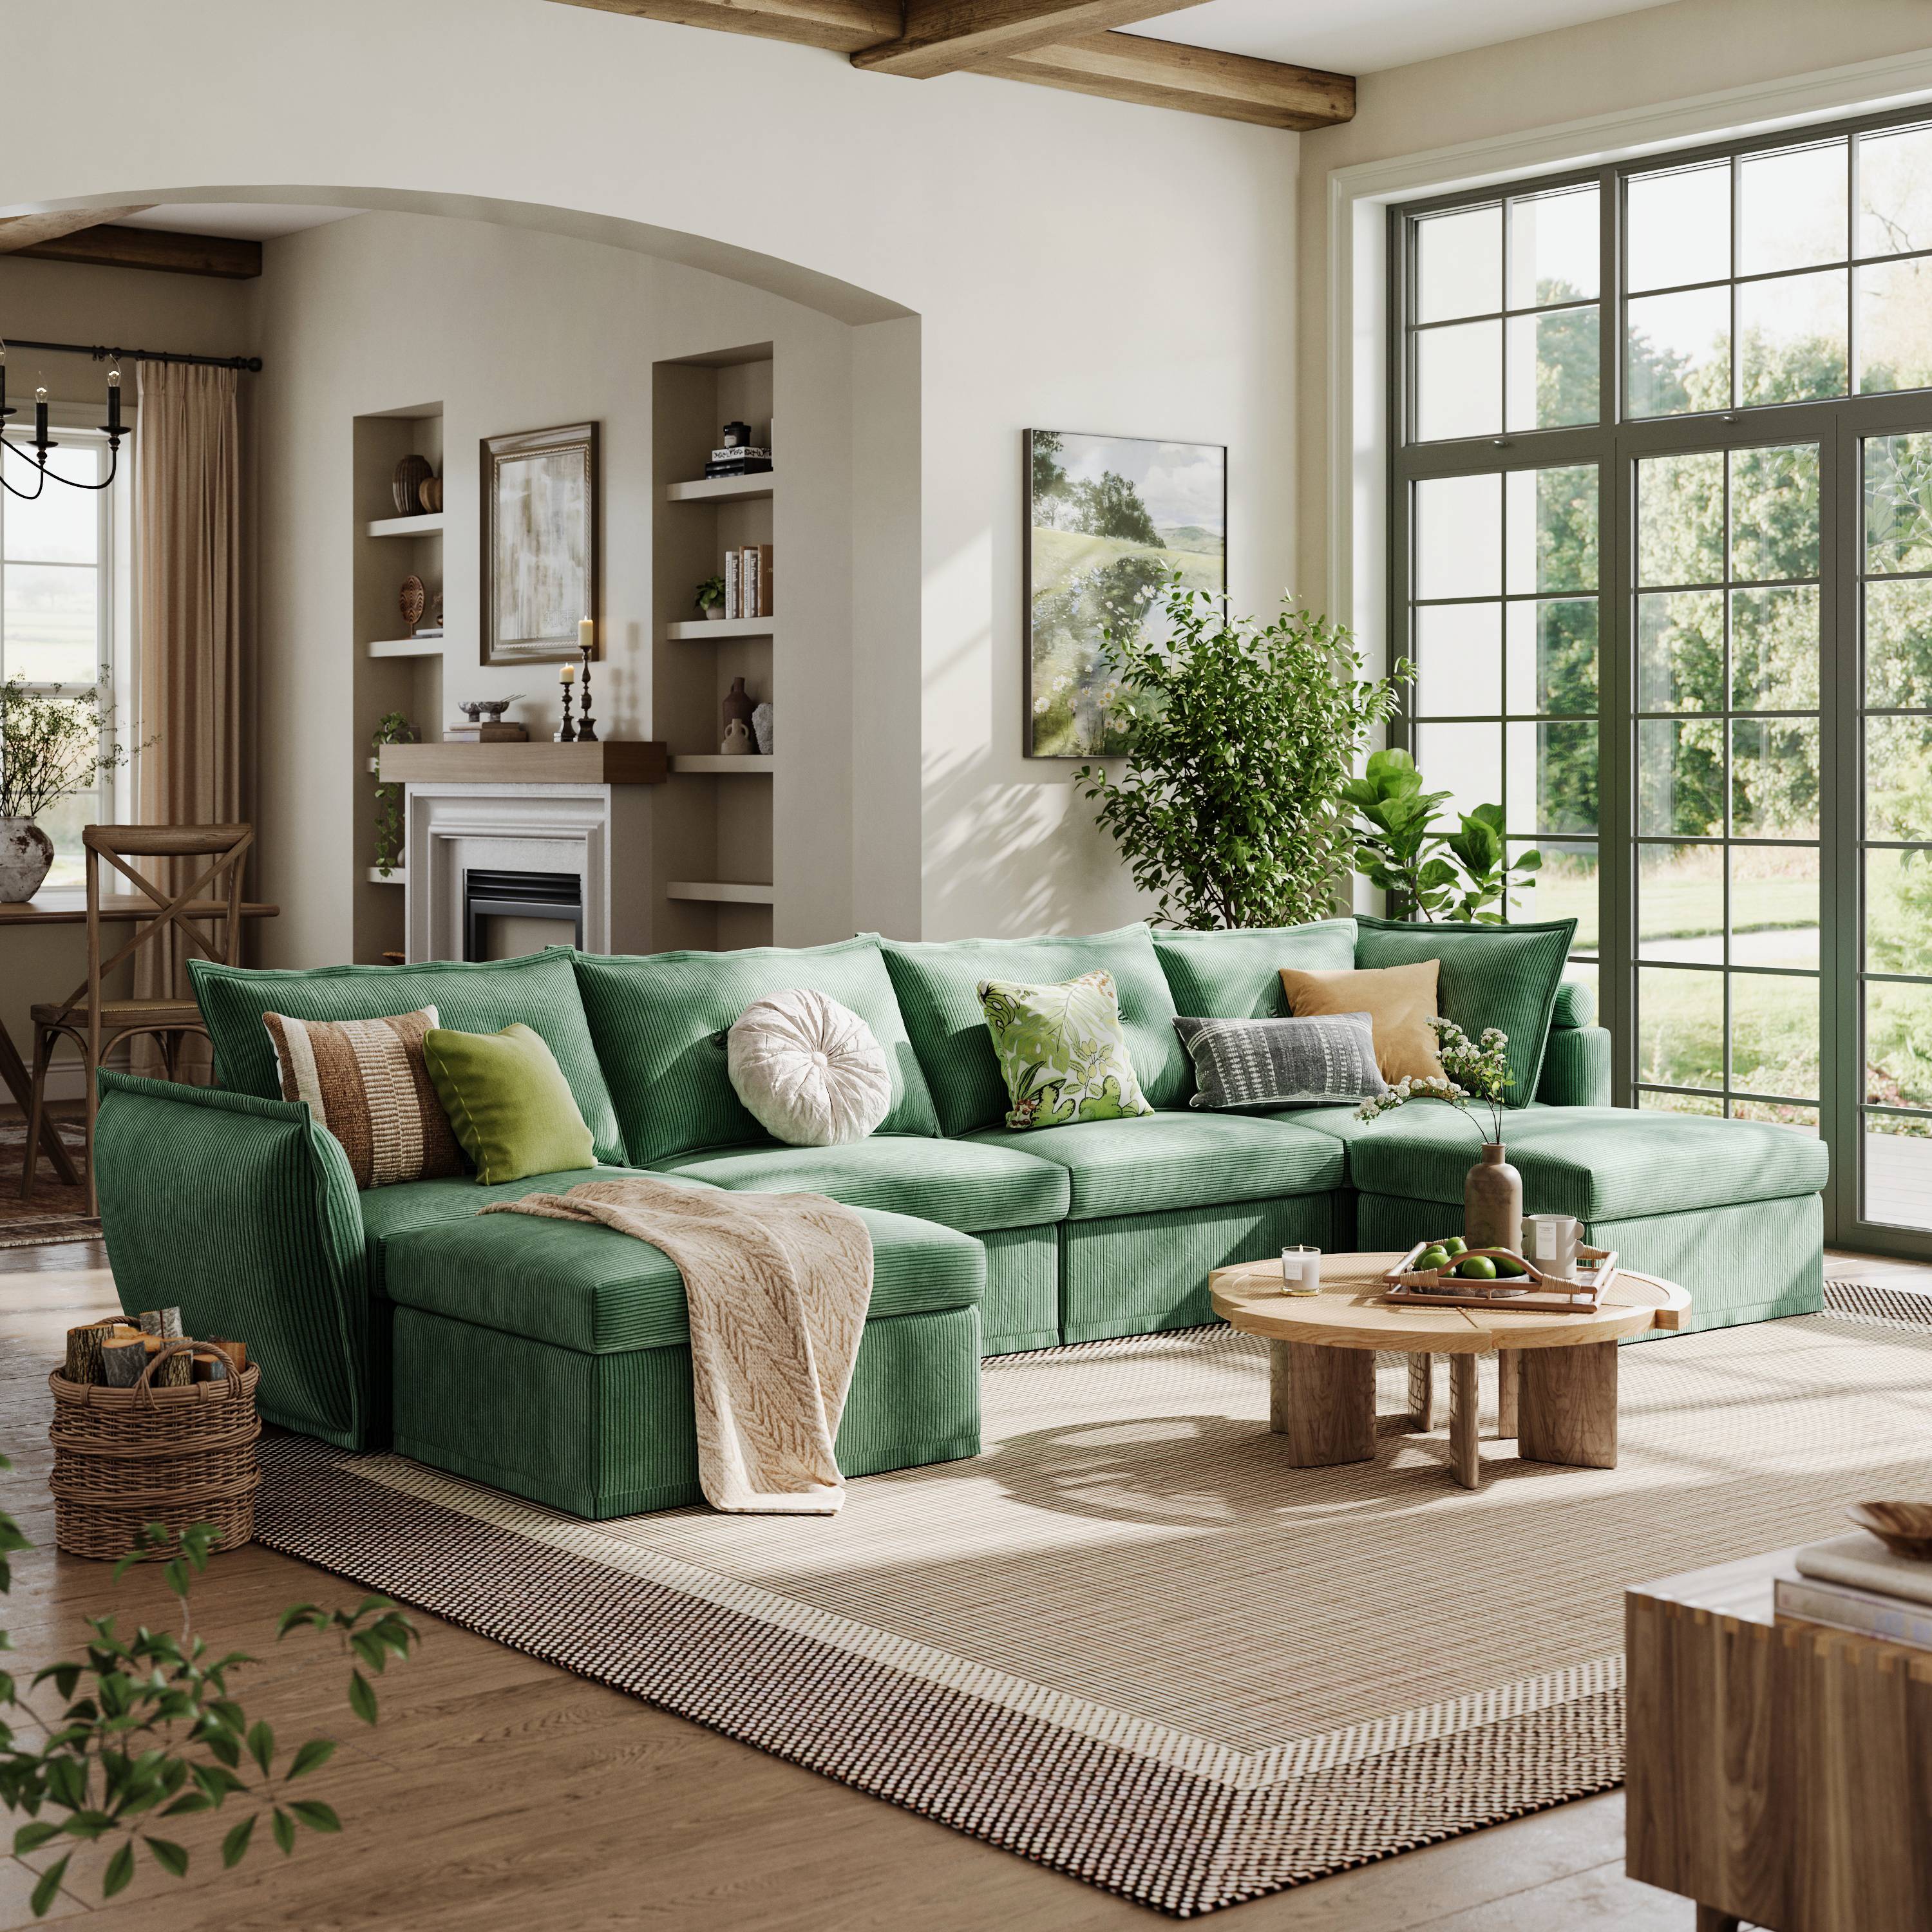 How to Arrange Your Modular Sofa